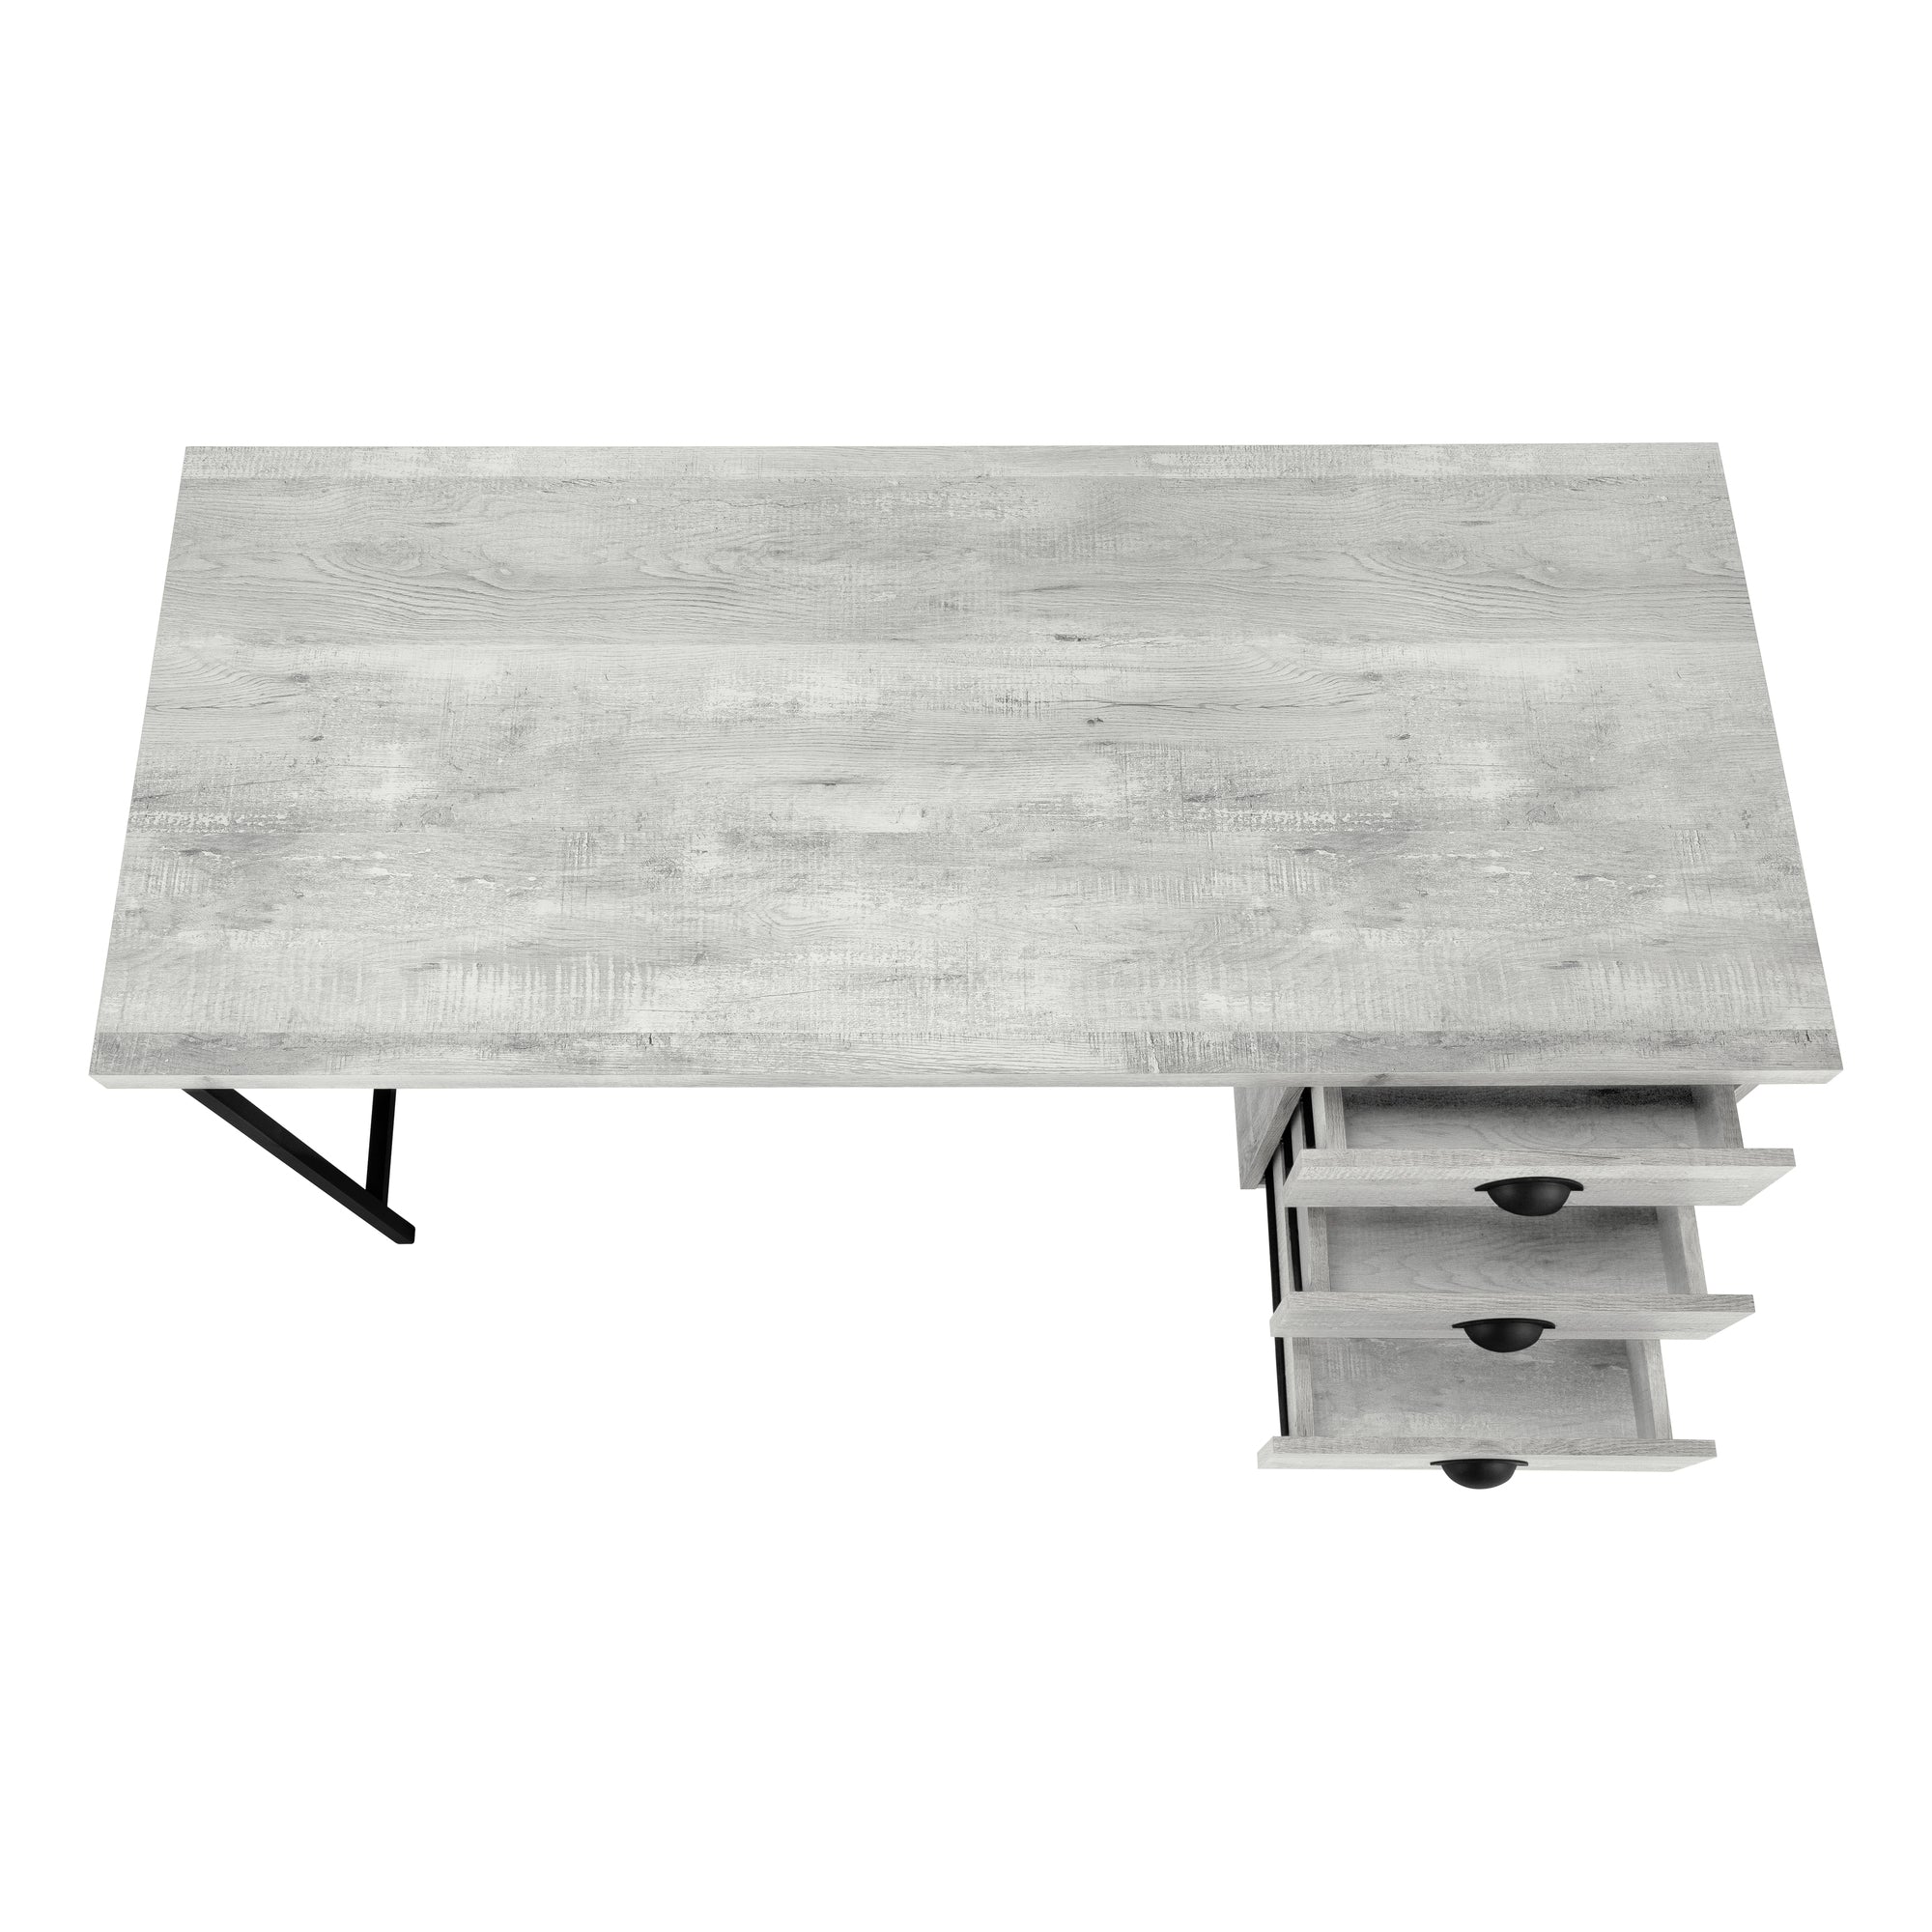 Computer Desk - 55L / Grey Reclaimed Wood / Black Metal